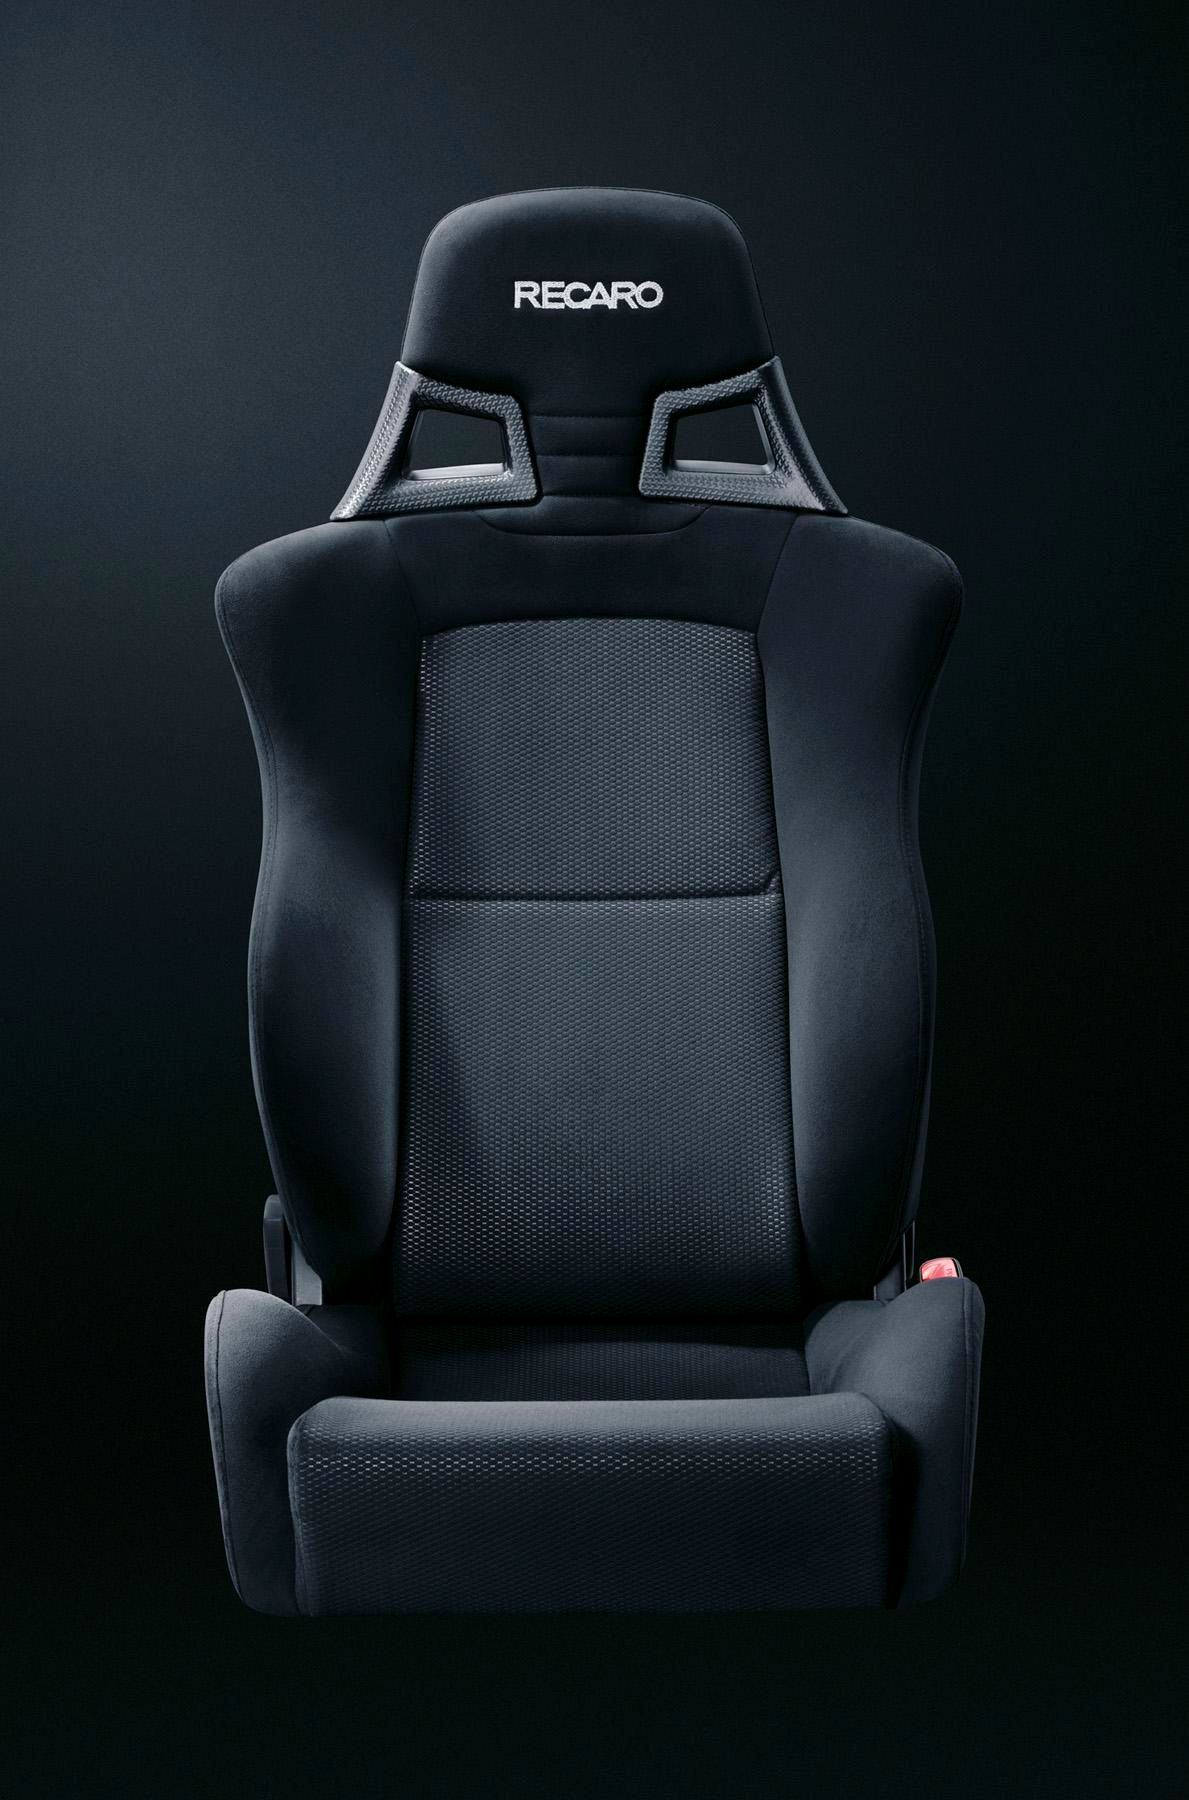 Lancer Evolution X RECARO Seat